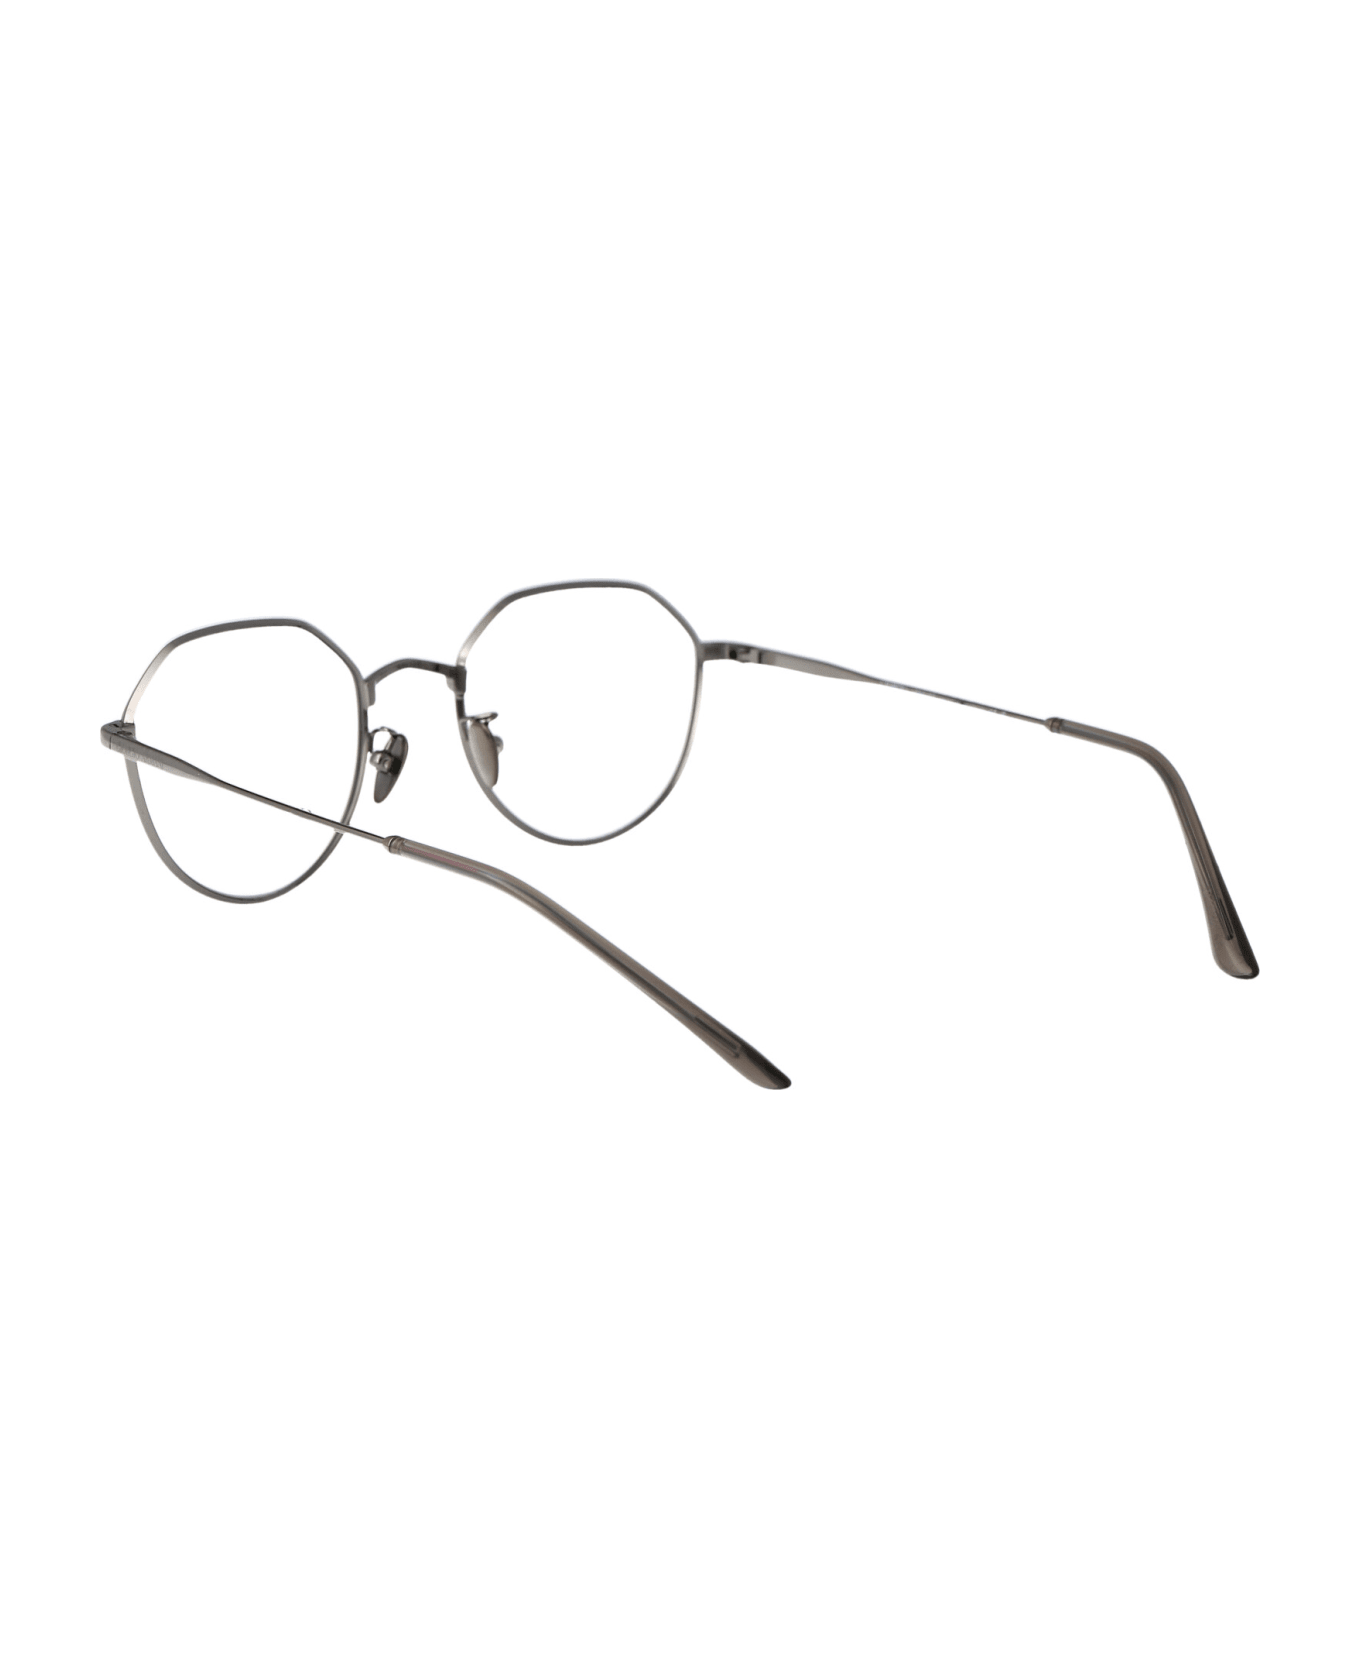 Giorgio Armani 0ar5142 Glasses - 3010 GUNMETAL